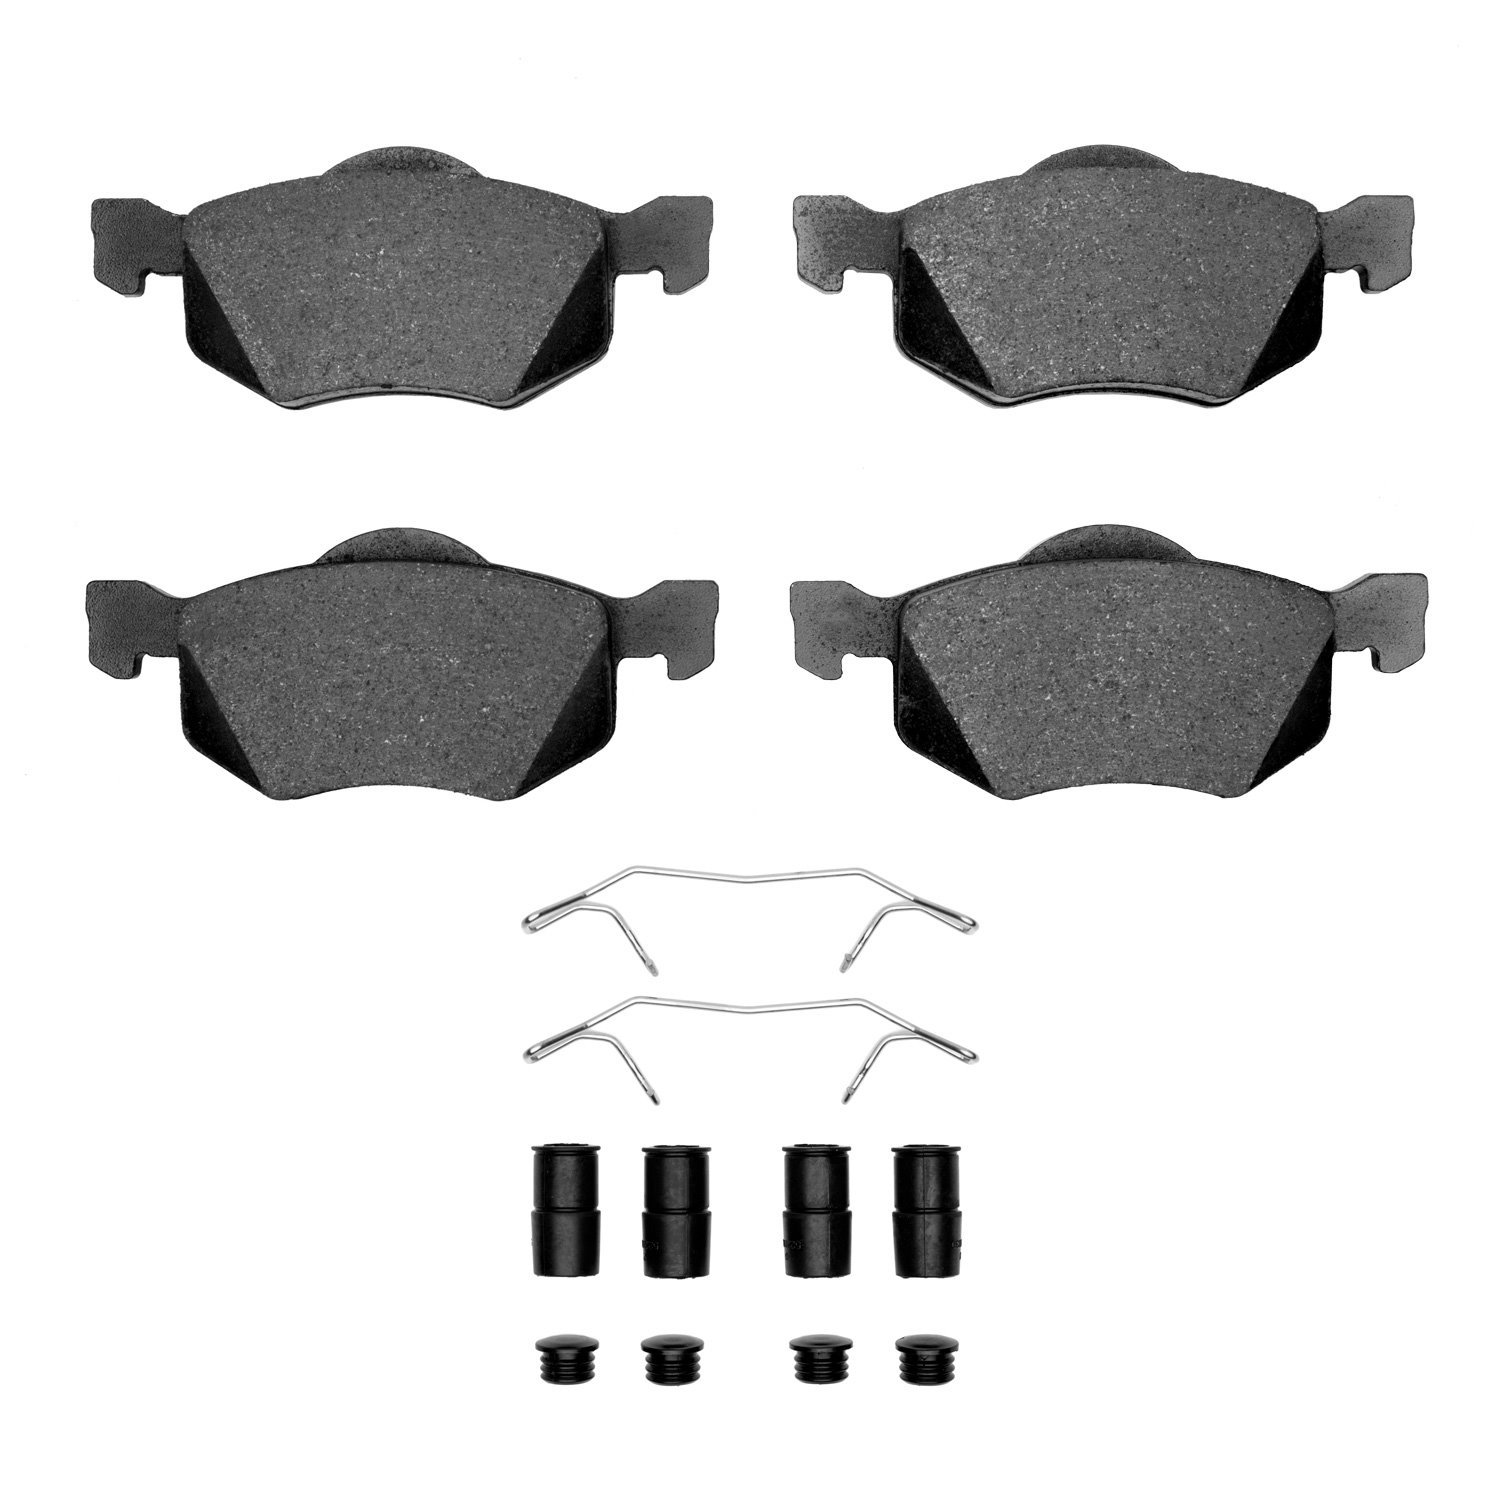 1310-0843-01 3000-Series Ceramic Brake Pads & Hardware Kit, 2001-2007 Ford/Lincoln/Mercury/Mazda, Position: Front